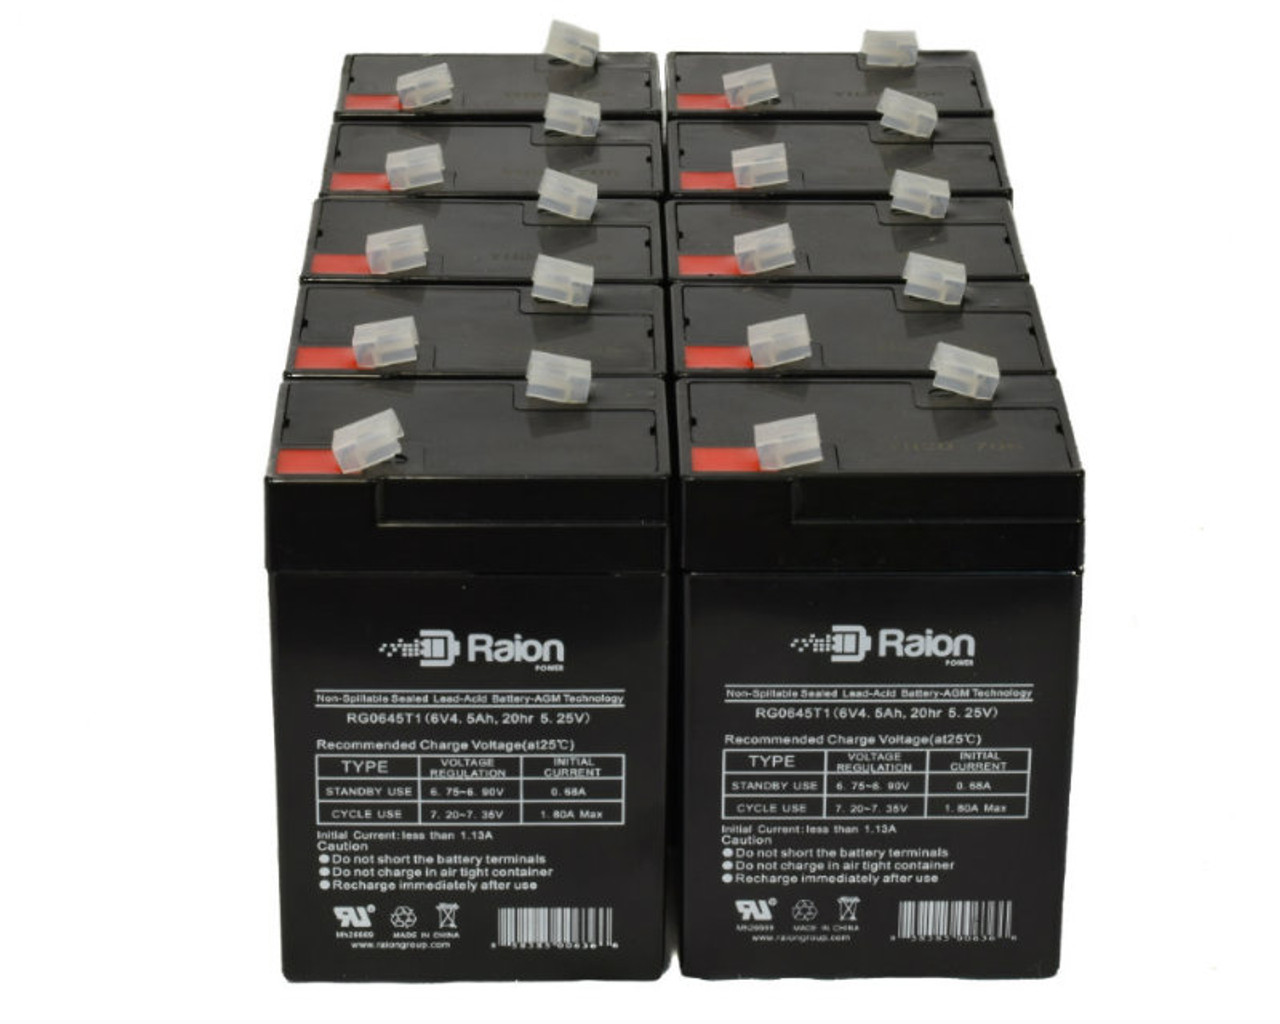 Raion Power 6V 4.5Ah Replacement Emergency Light Battery for Dual-Lite CVT3GW - 10 Pack